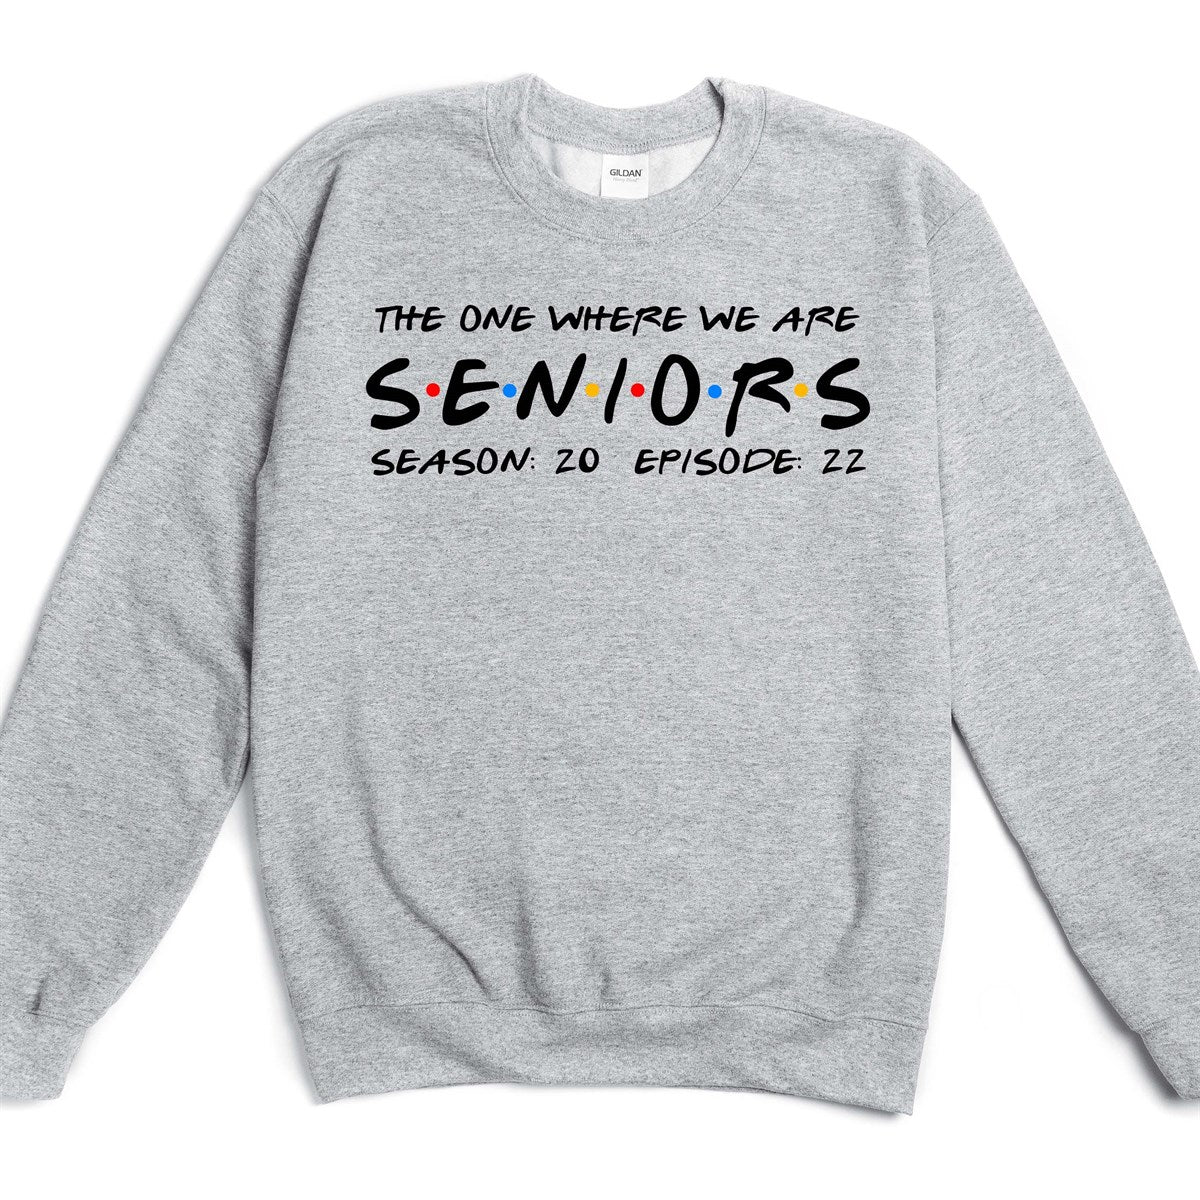 The One Where We Are Seniors Season 20 Episode 22 Crew Sweatshirt